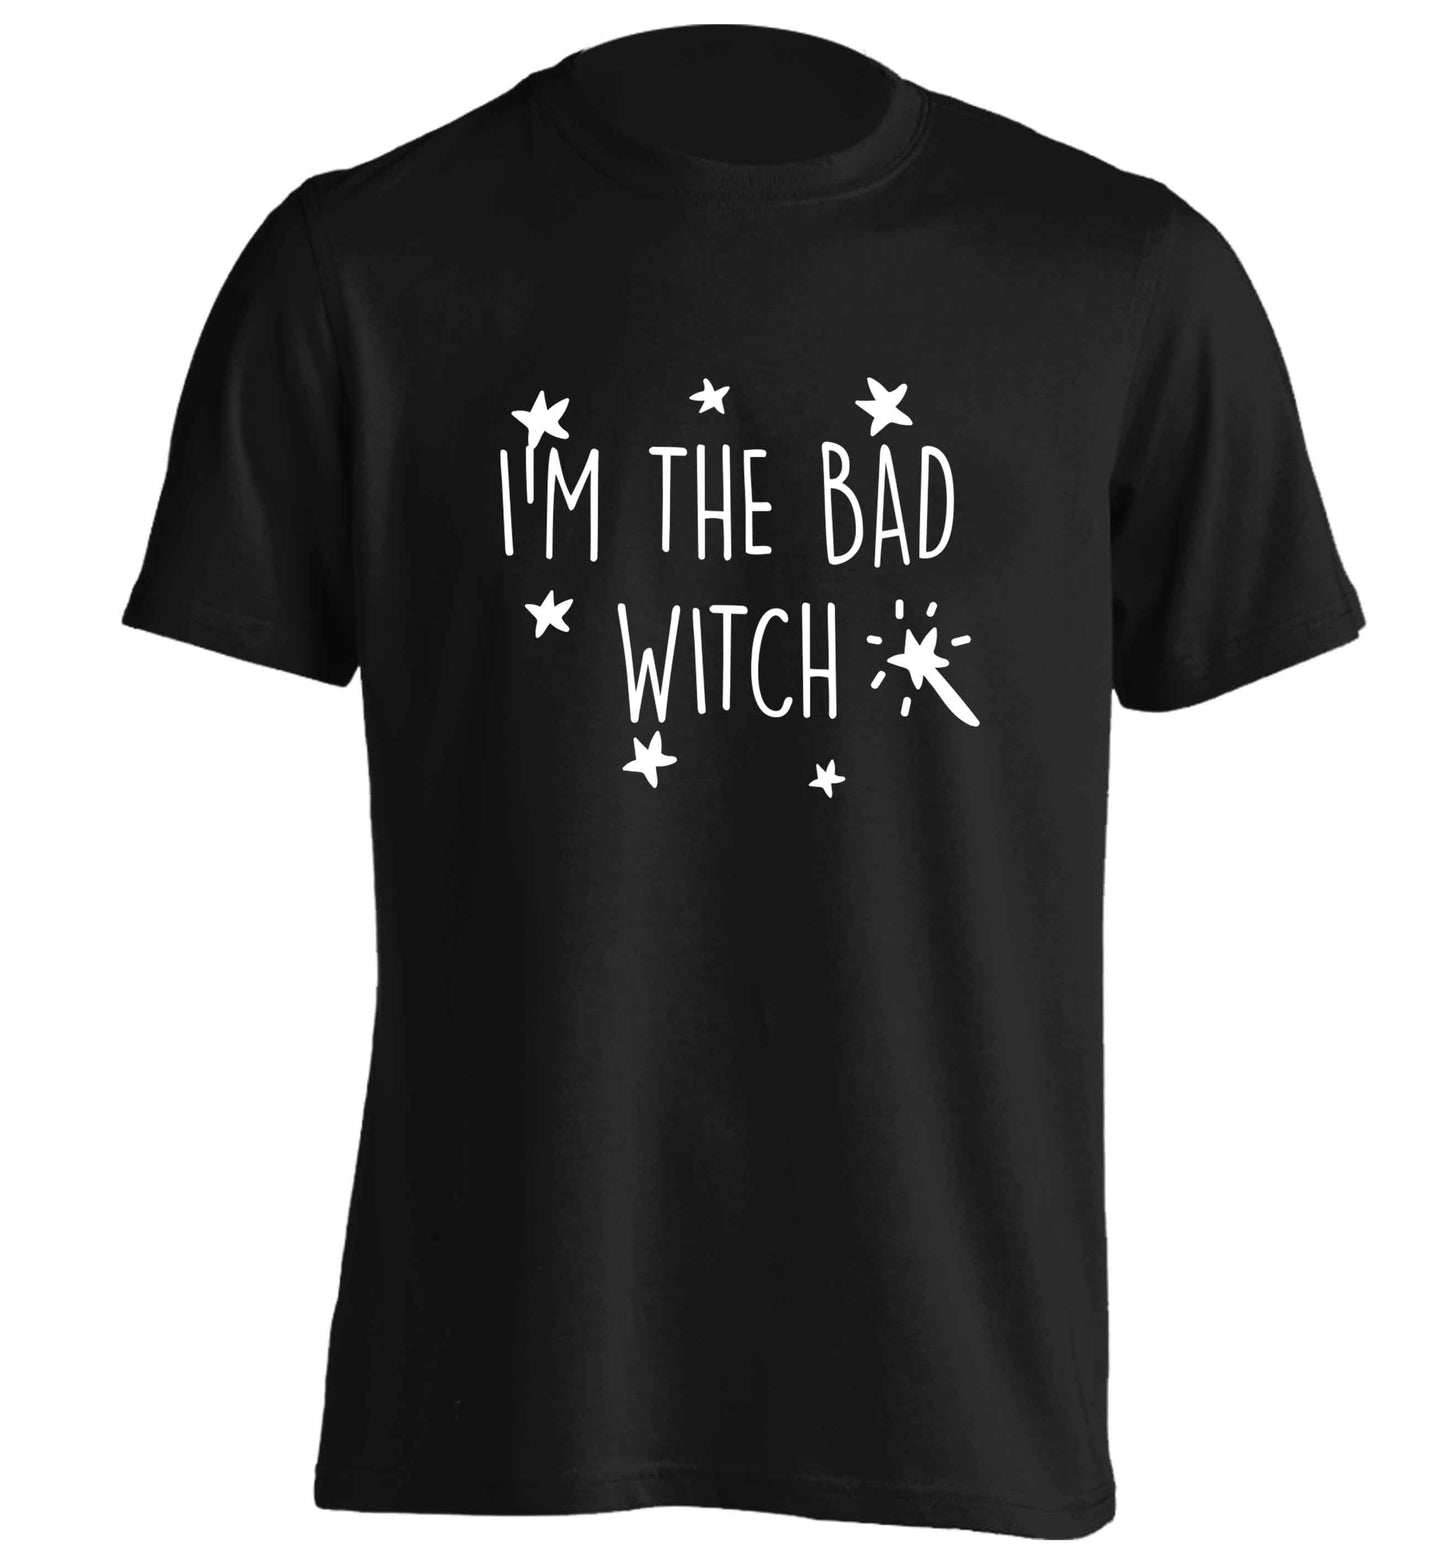 Bad witch adults unisex black Tshirt 2XL